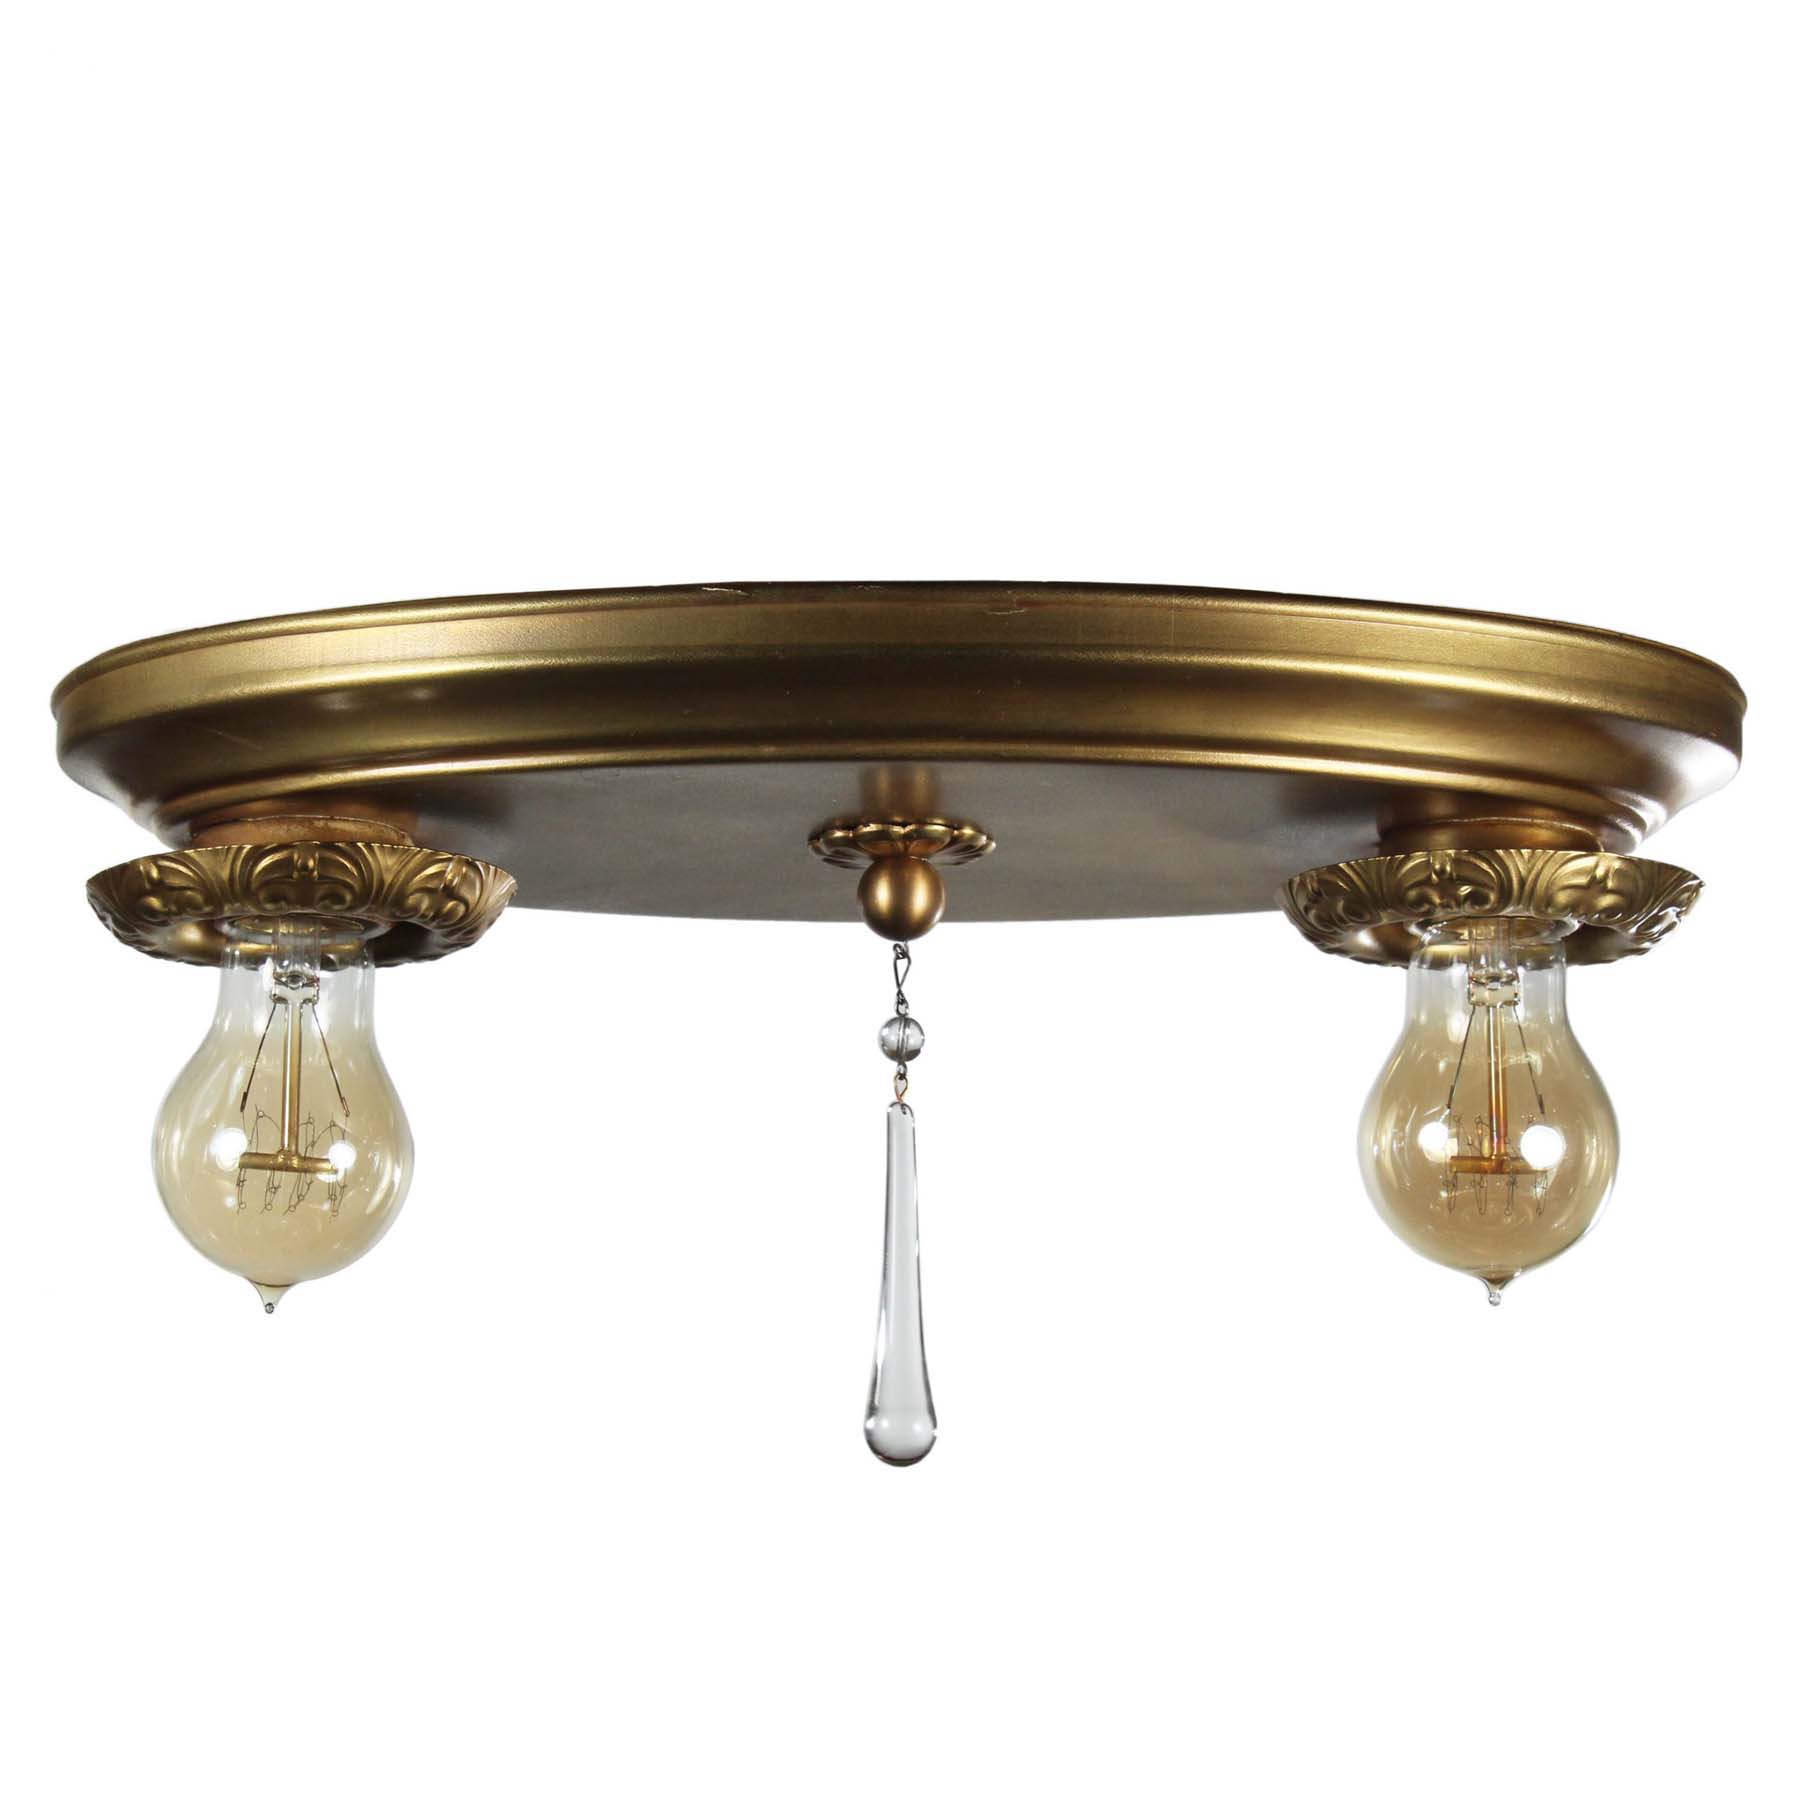 Matching Flush Mount Fixtures in Brass, Antique Lighting-72066